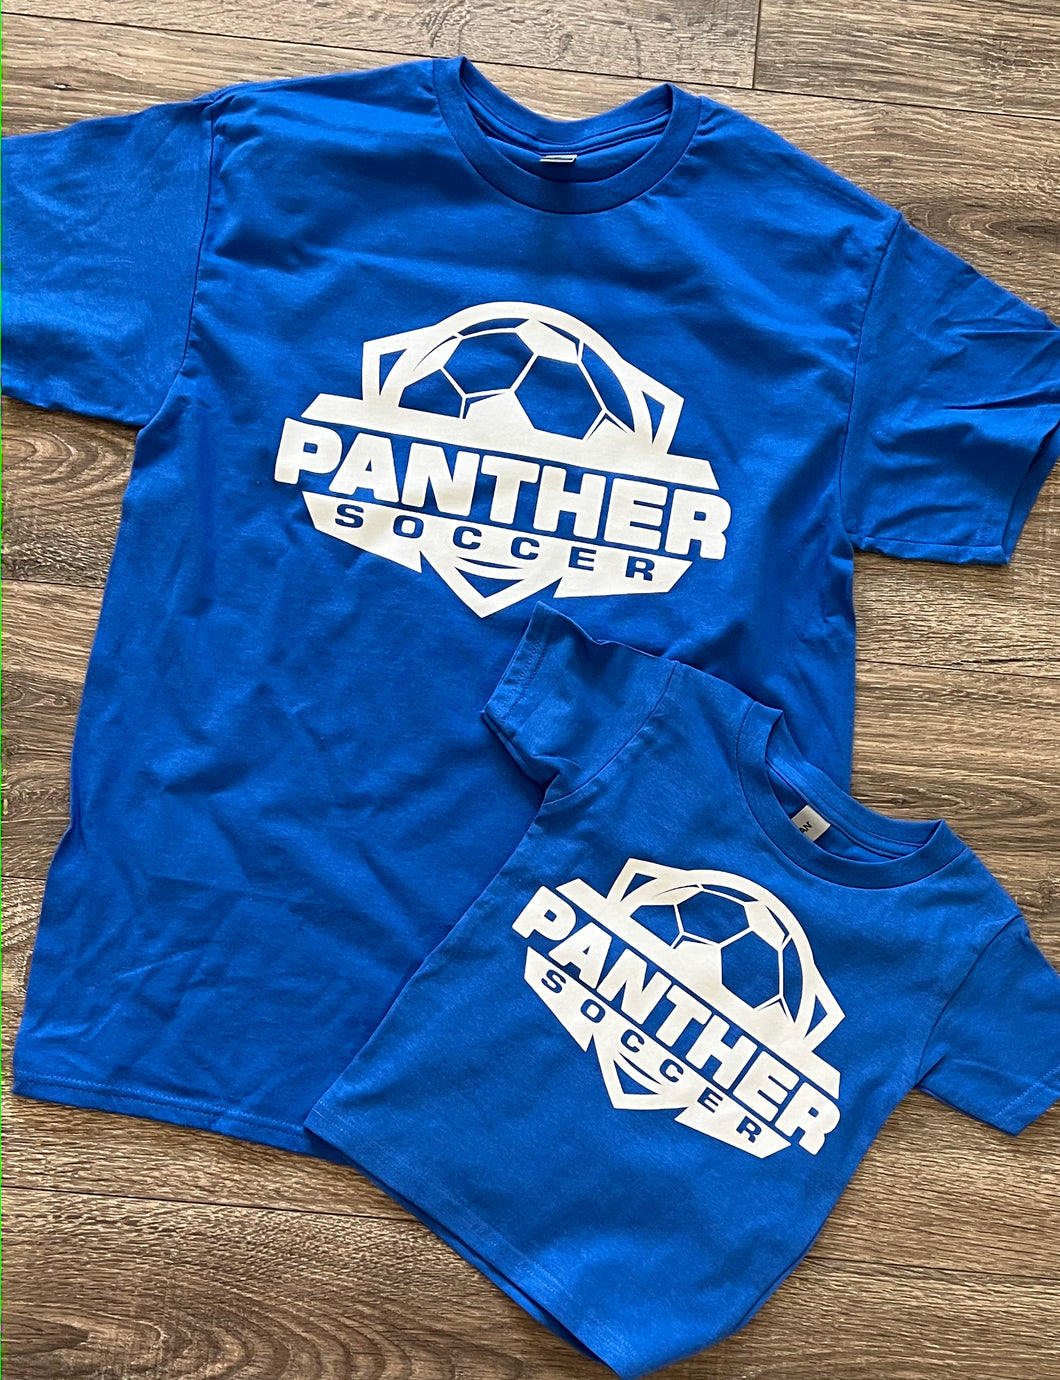 Panther Soccer, Royal Blue Gildan Shirts - Mavictoria Designs Hot Press Express